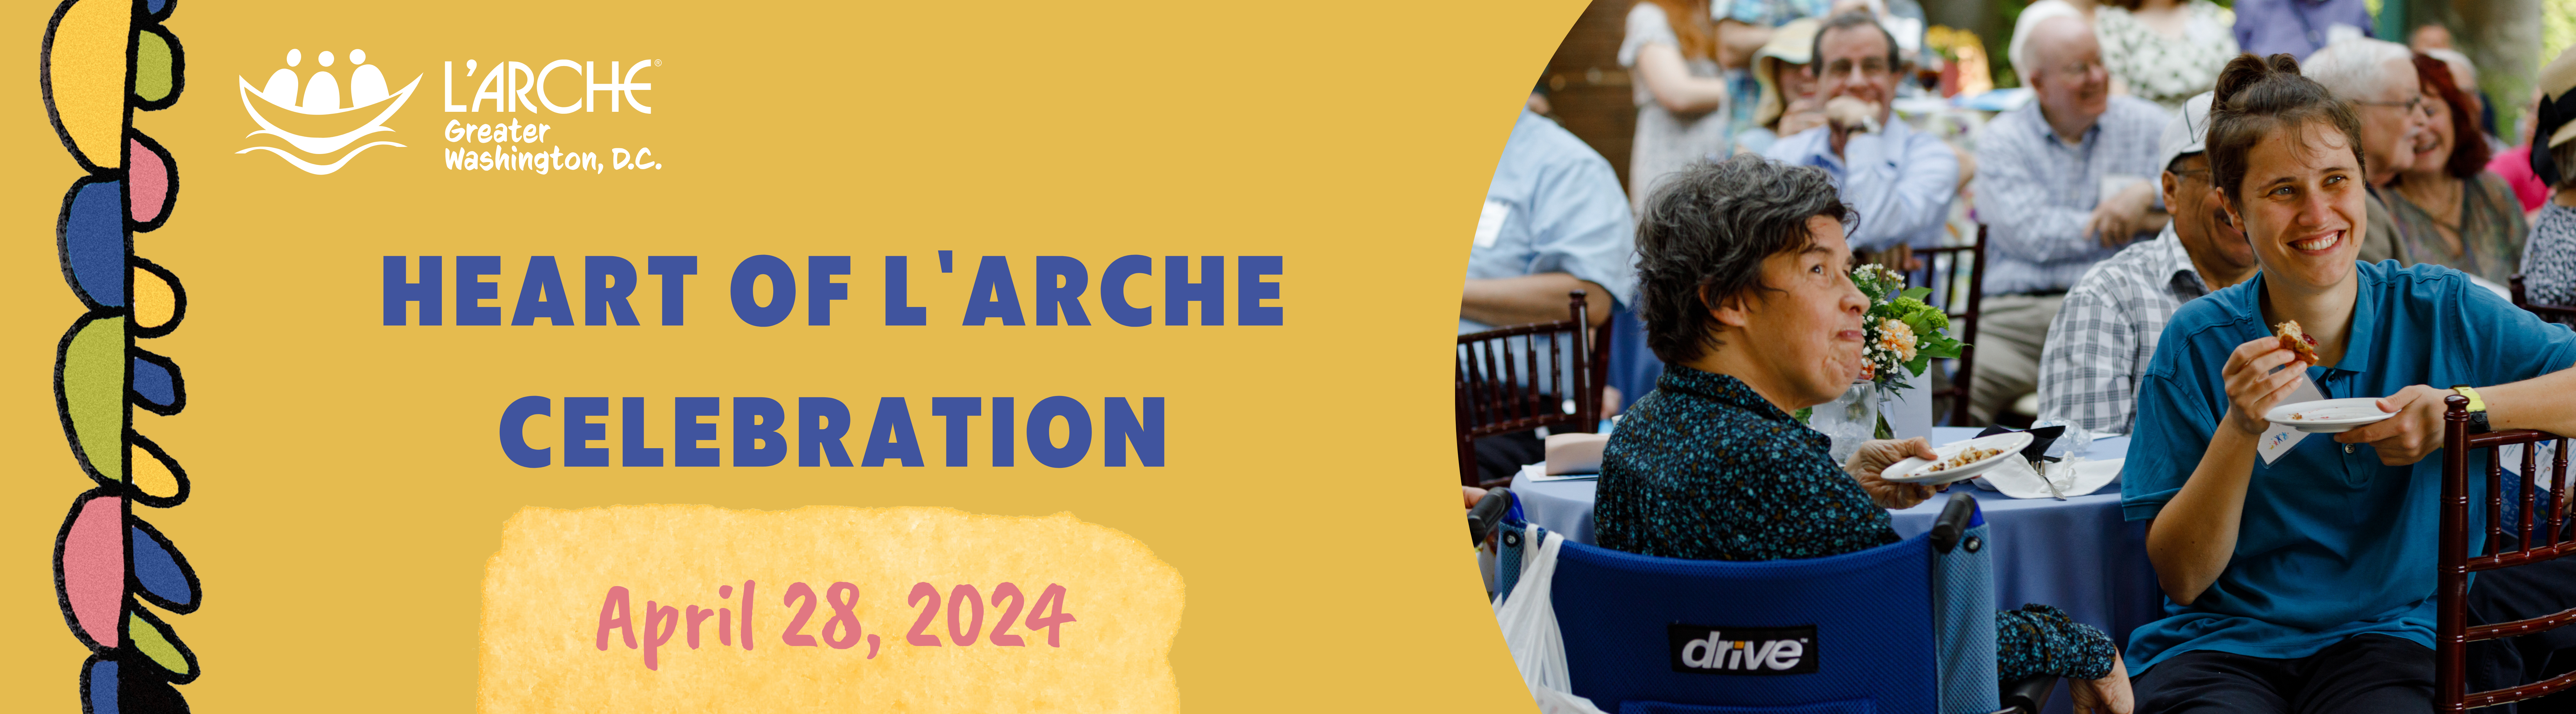 Heart of L'Arche Celebration: April 28, 2024